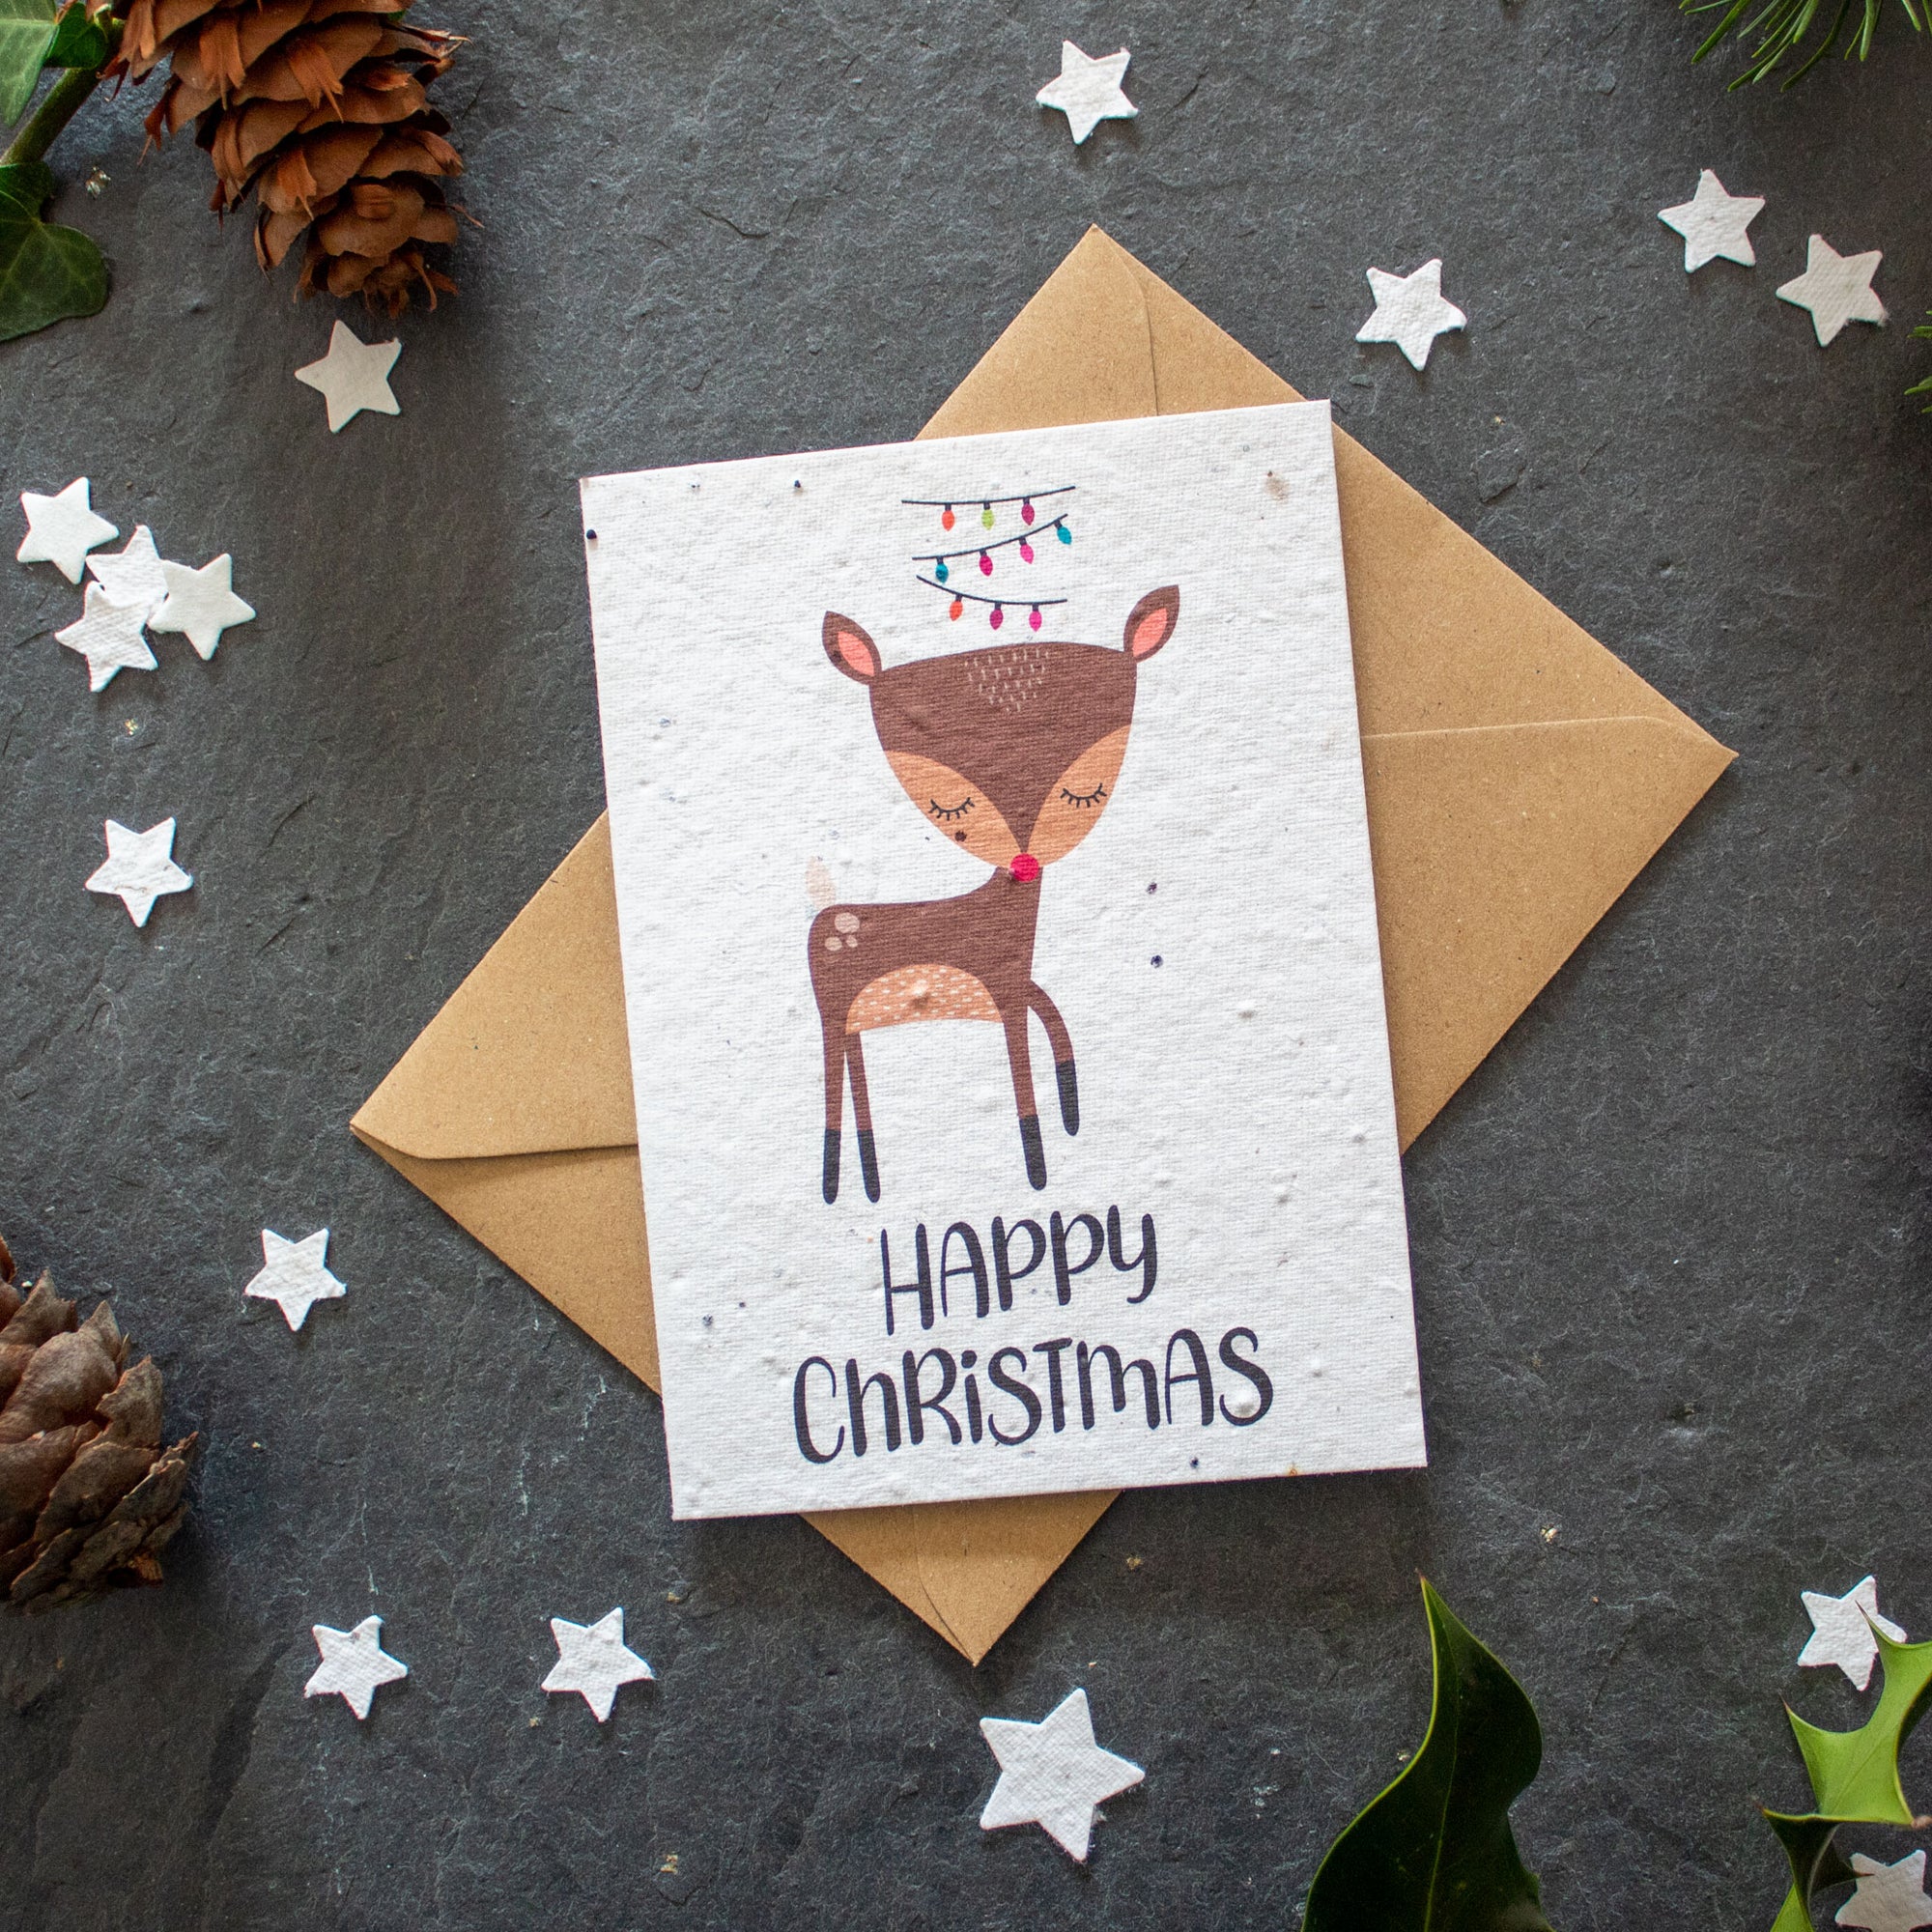 Plantable Christmas Card - Reindeer | Greetings Card - The Naughty Shrew